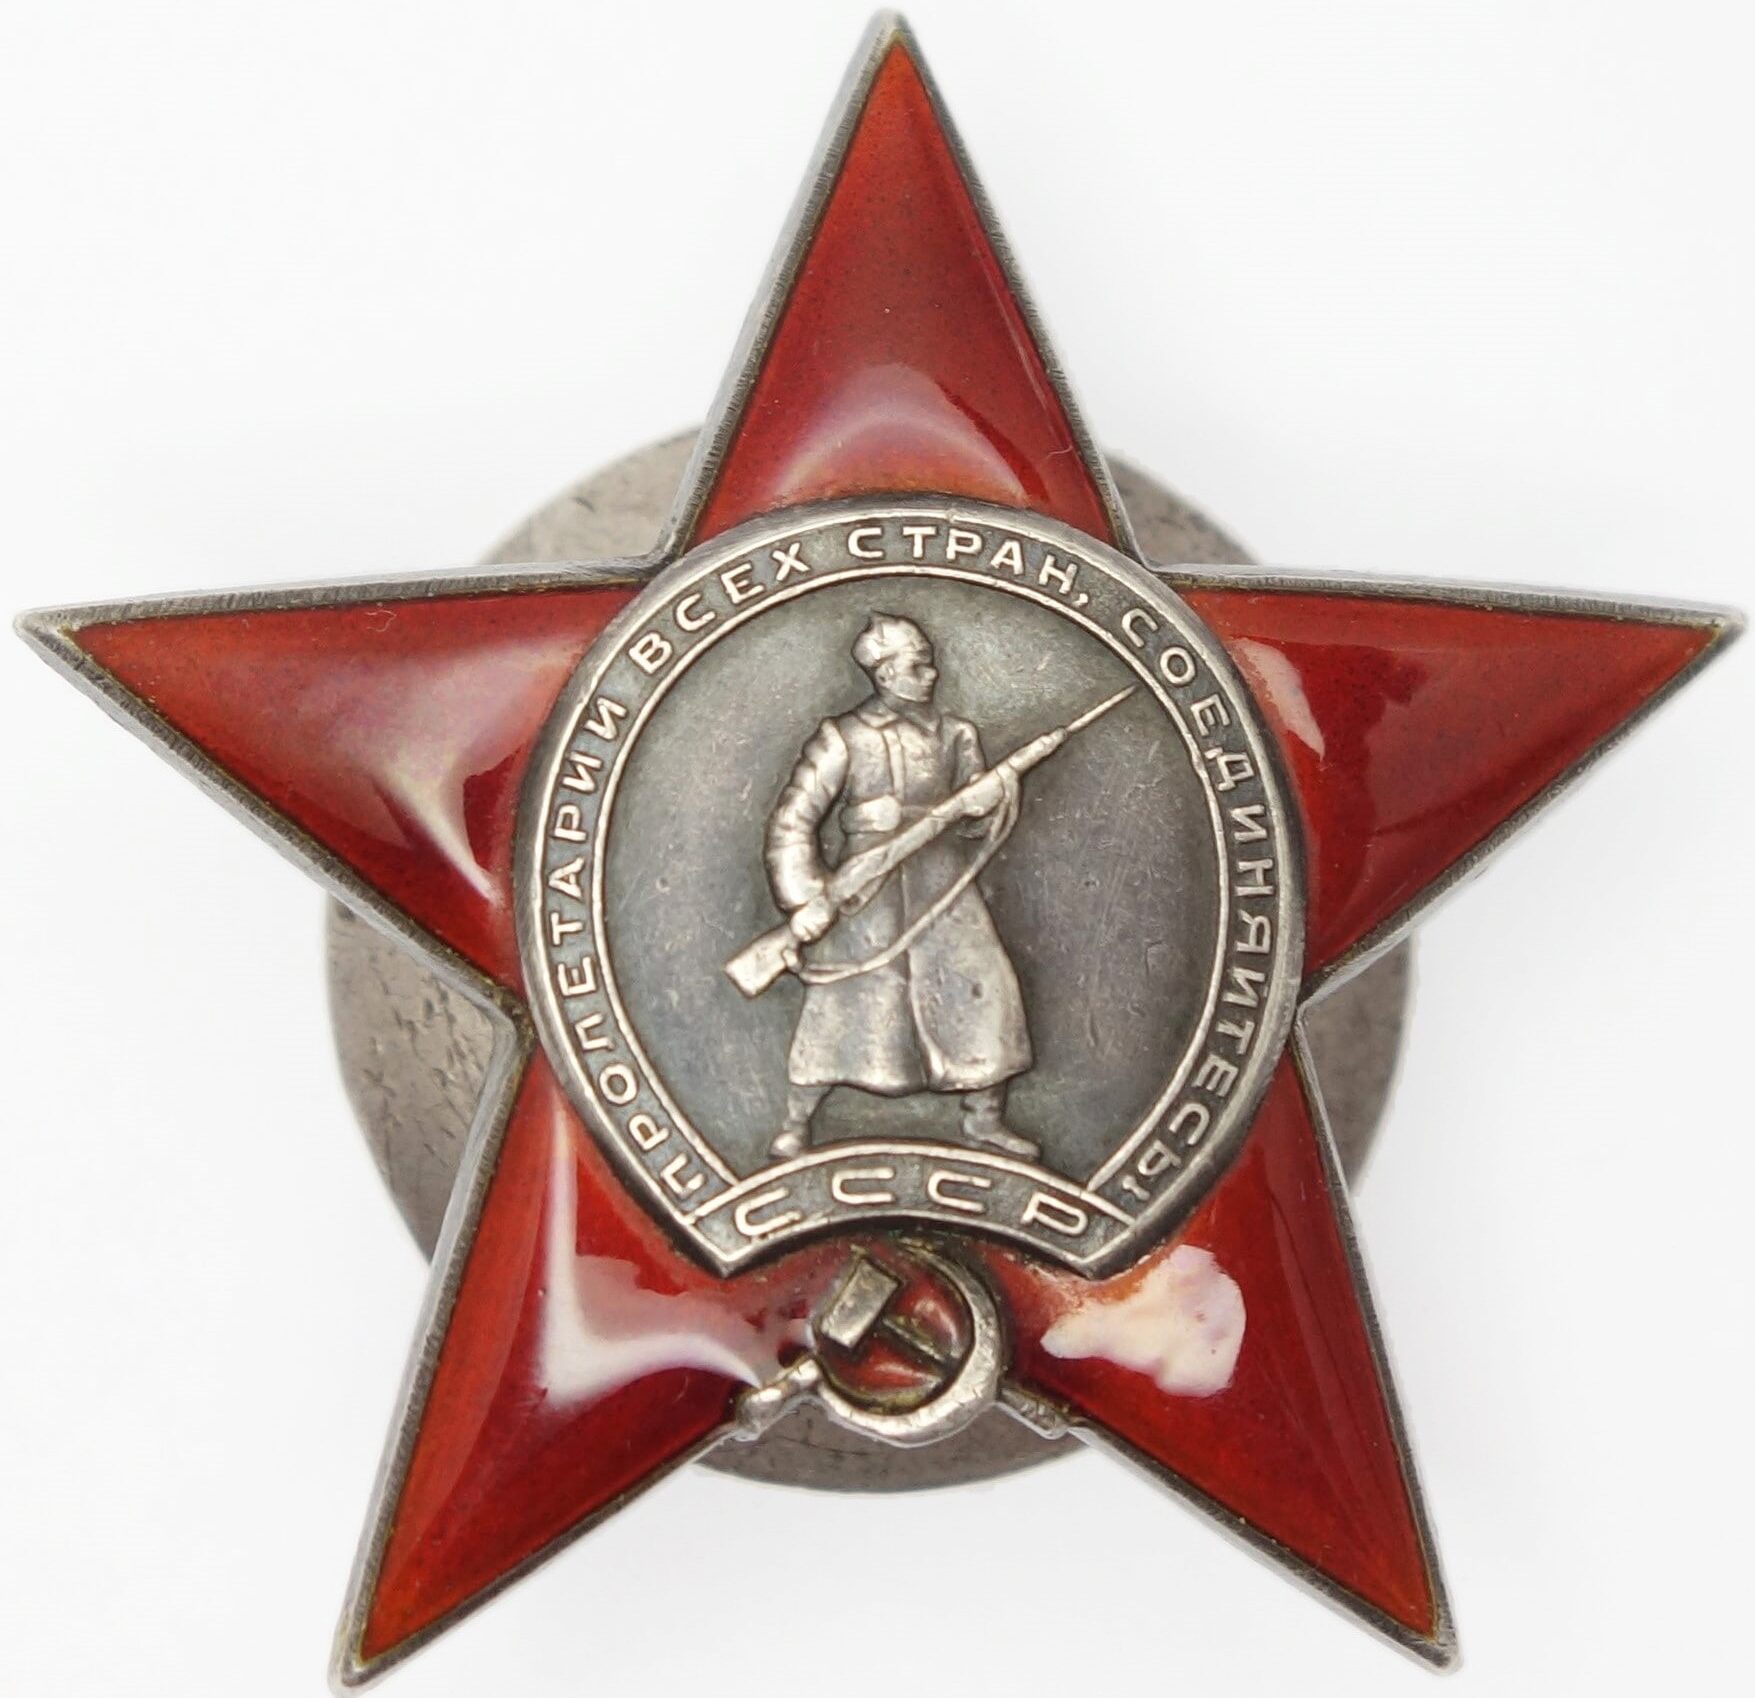 Награда орден красной звезды. Орден красной звезды (ЧССР). Орден красной звезды 1942. Орден красной звезды 1930 года фото. Орден красной звезды 1944.